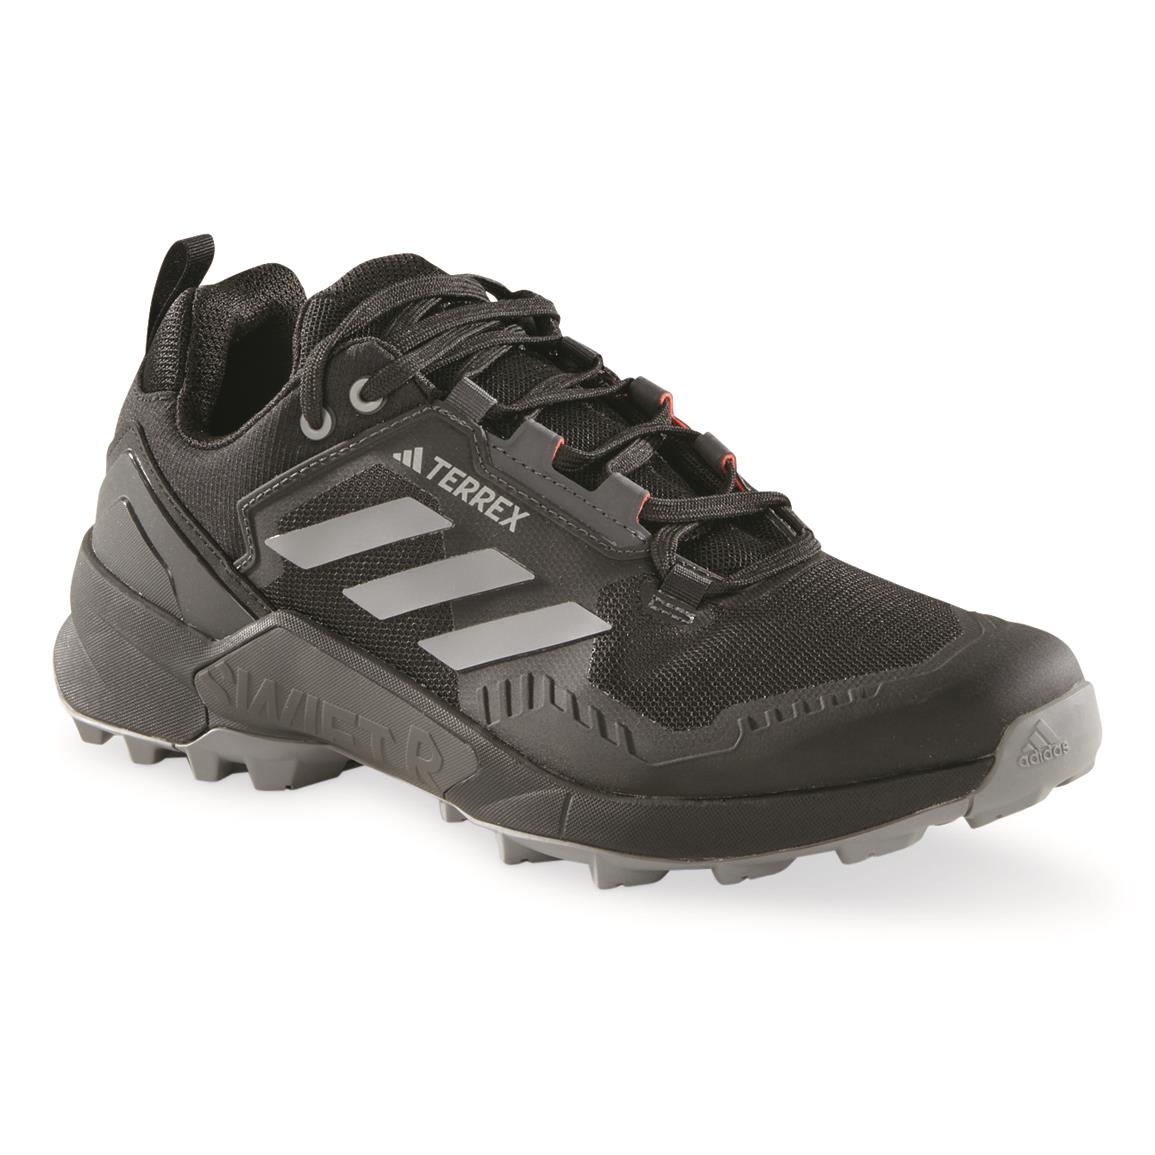 Adidas Men's Terrex Swift R3 Hiking Shoes, Core Black/grey Three/solar Red